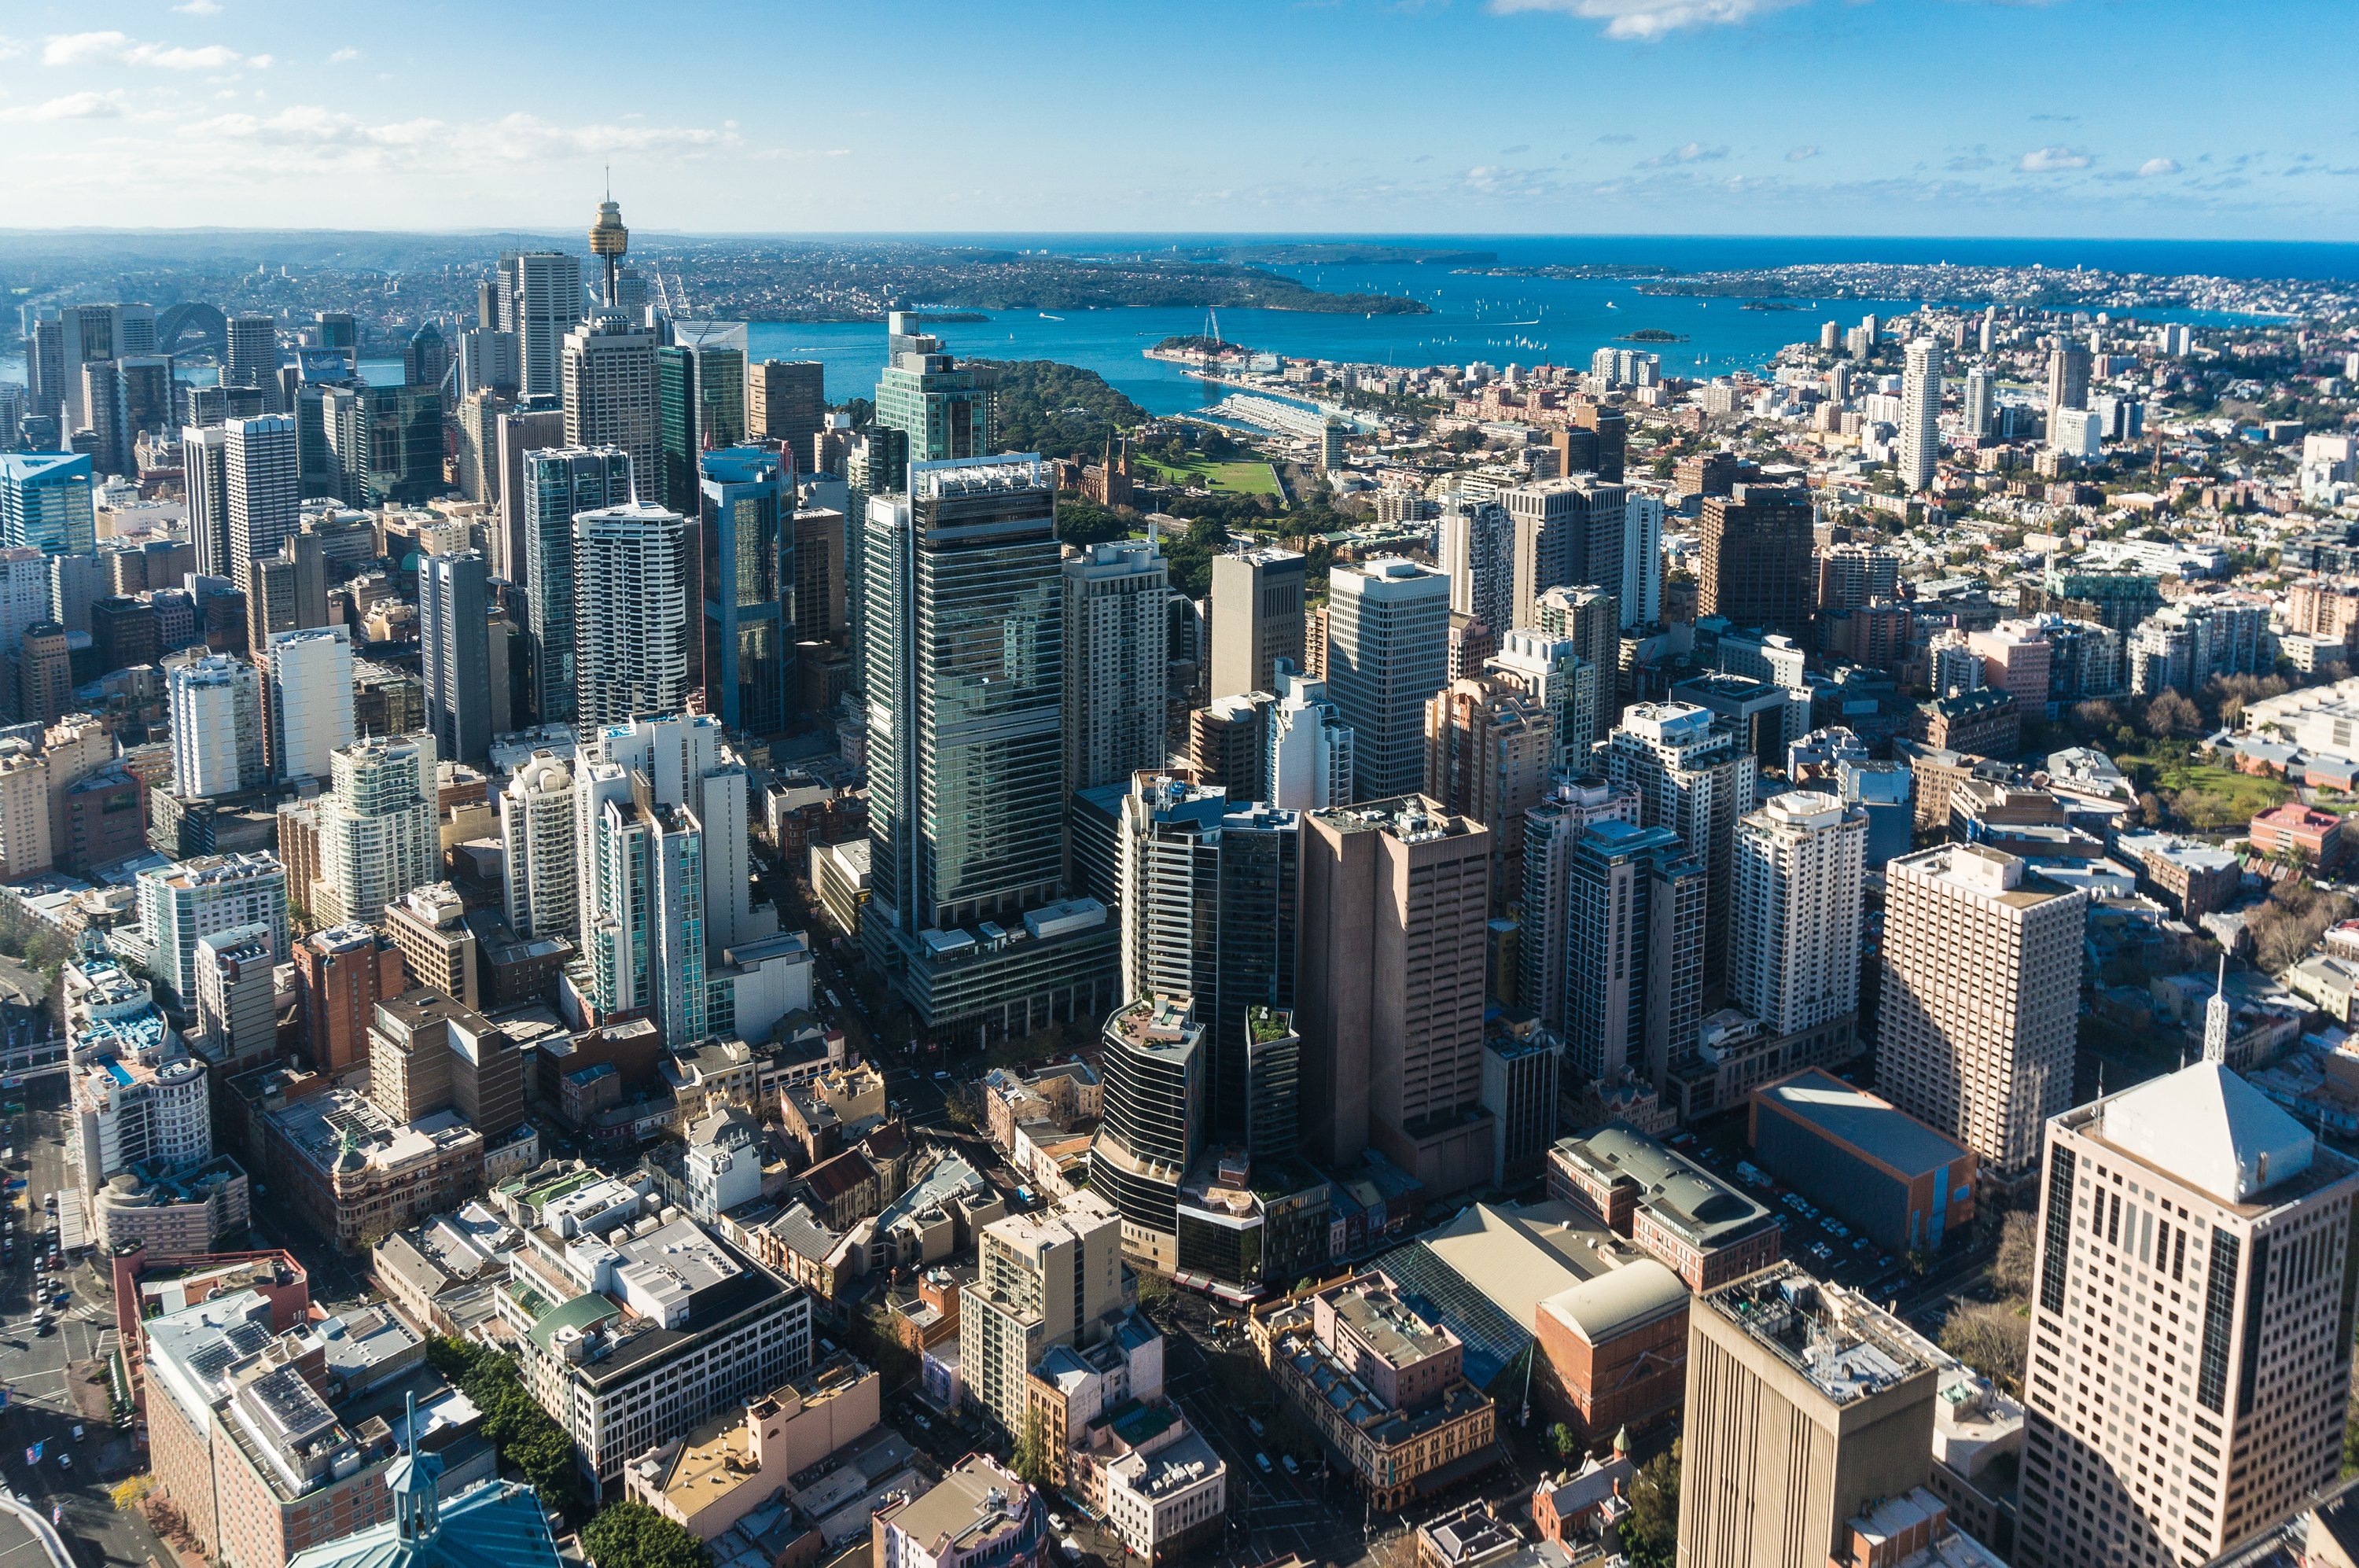 Sydney Australias business district